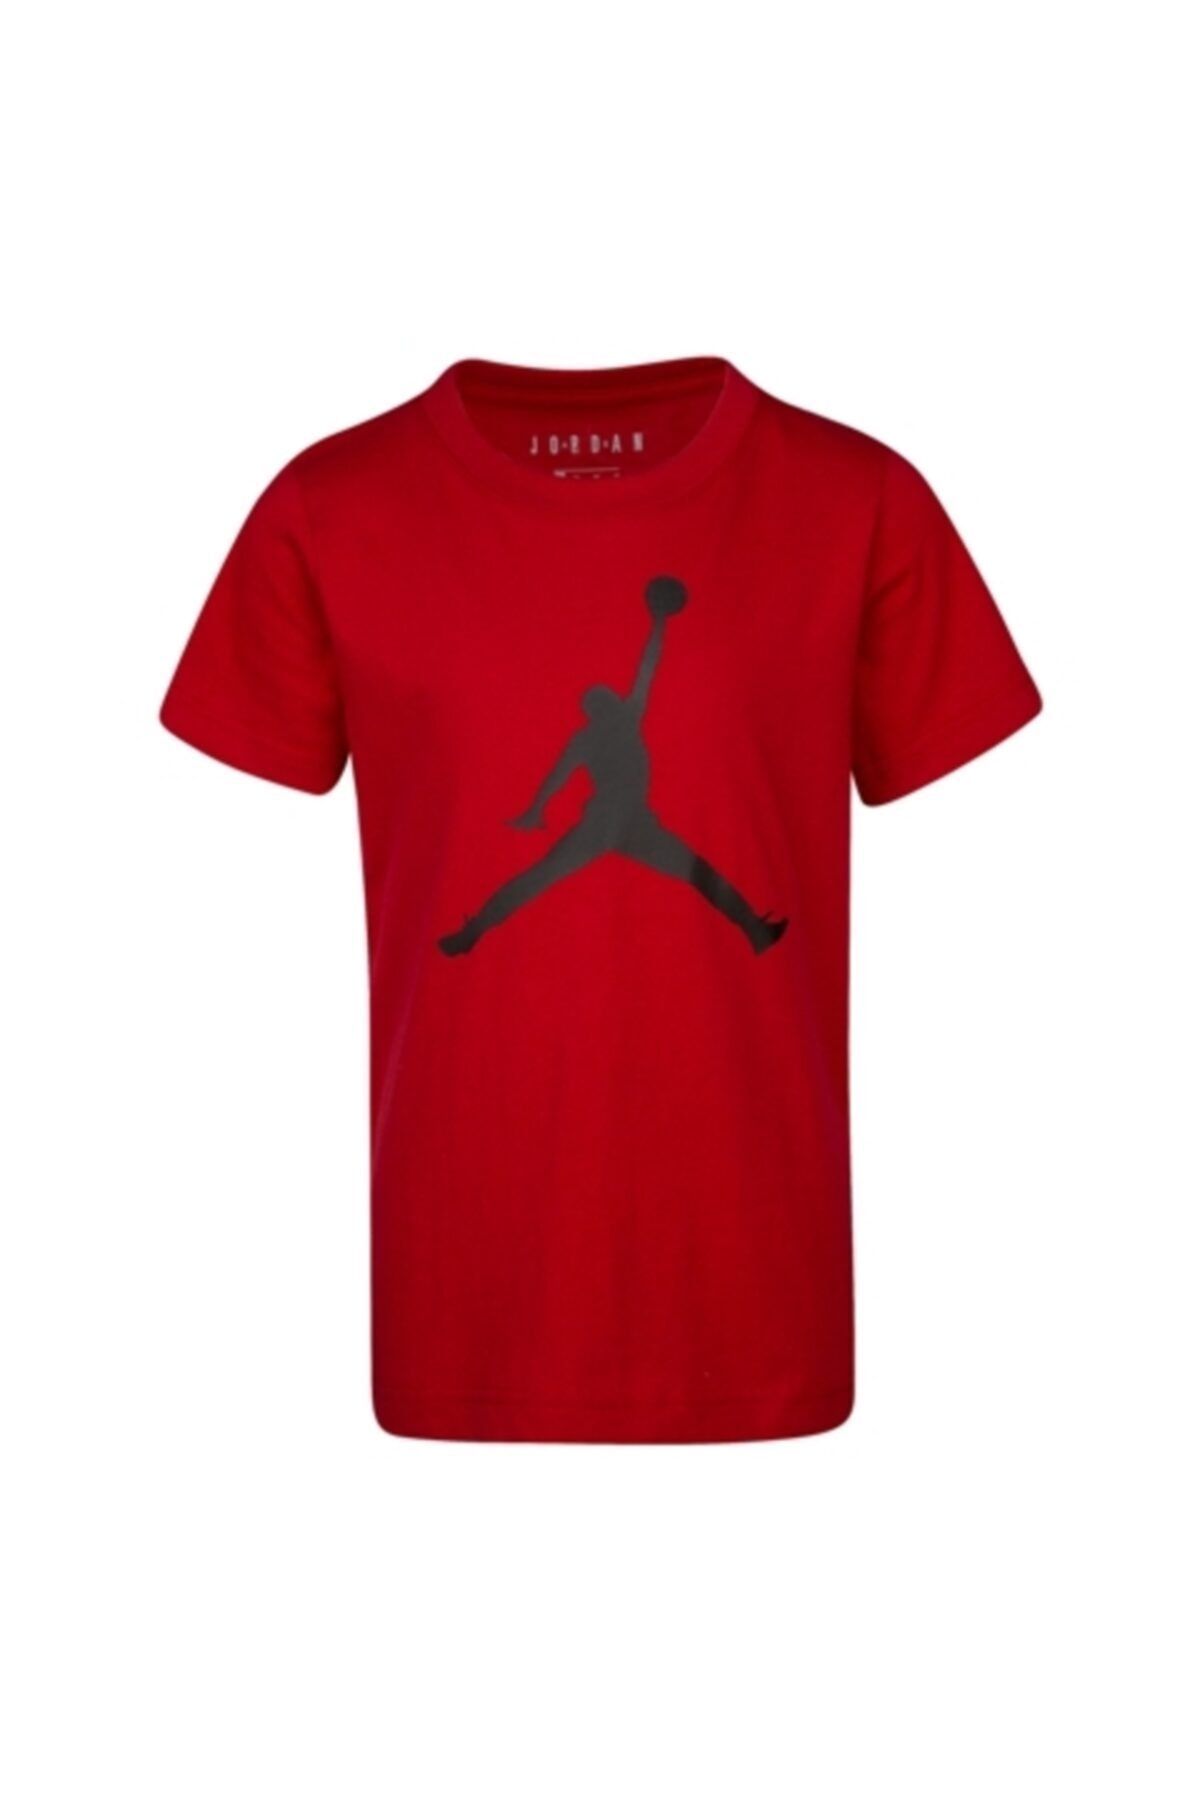 Nike Erkek Çocuk Kırmızı Spor T-Shirt 852423-r78